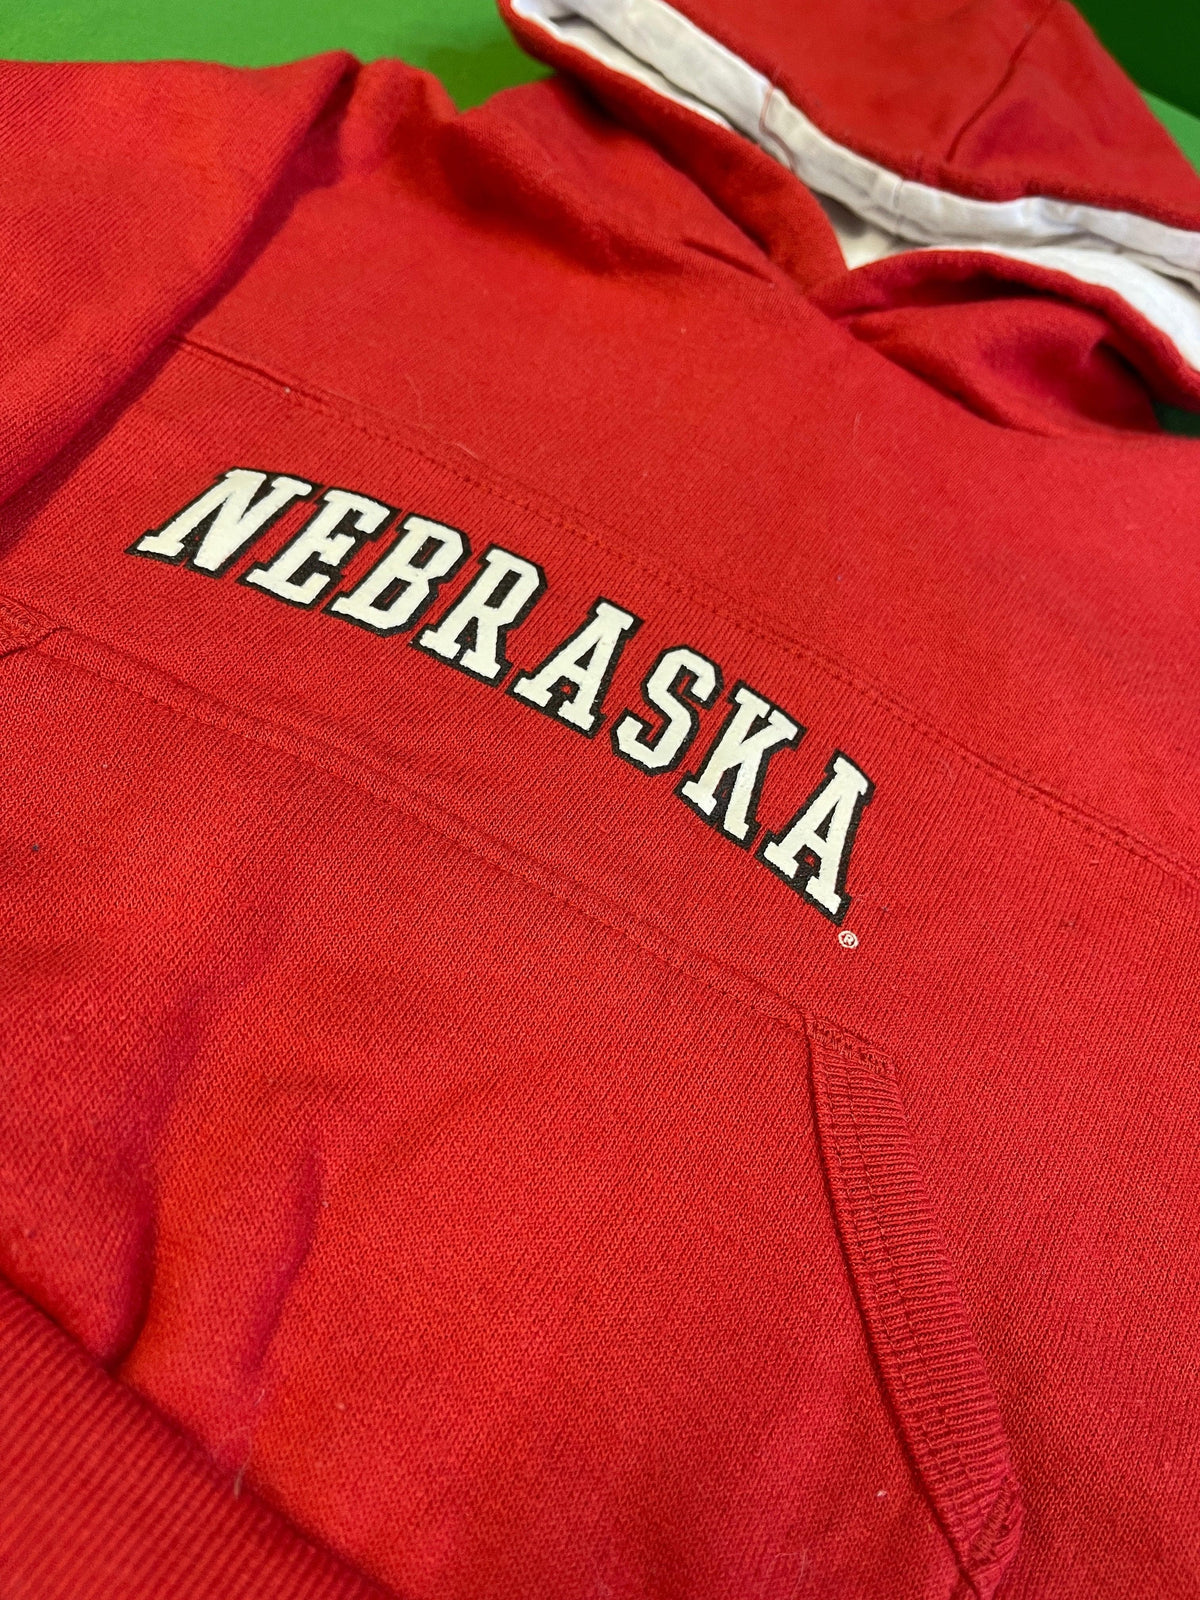 NCAA Nebraska Cornhuskers 2-pc Track Suit Toddler 12 months